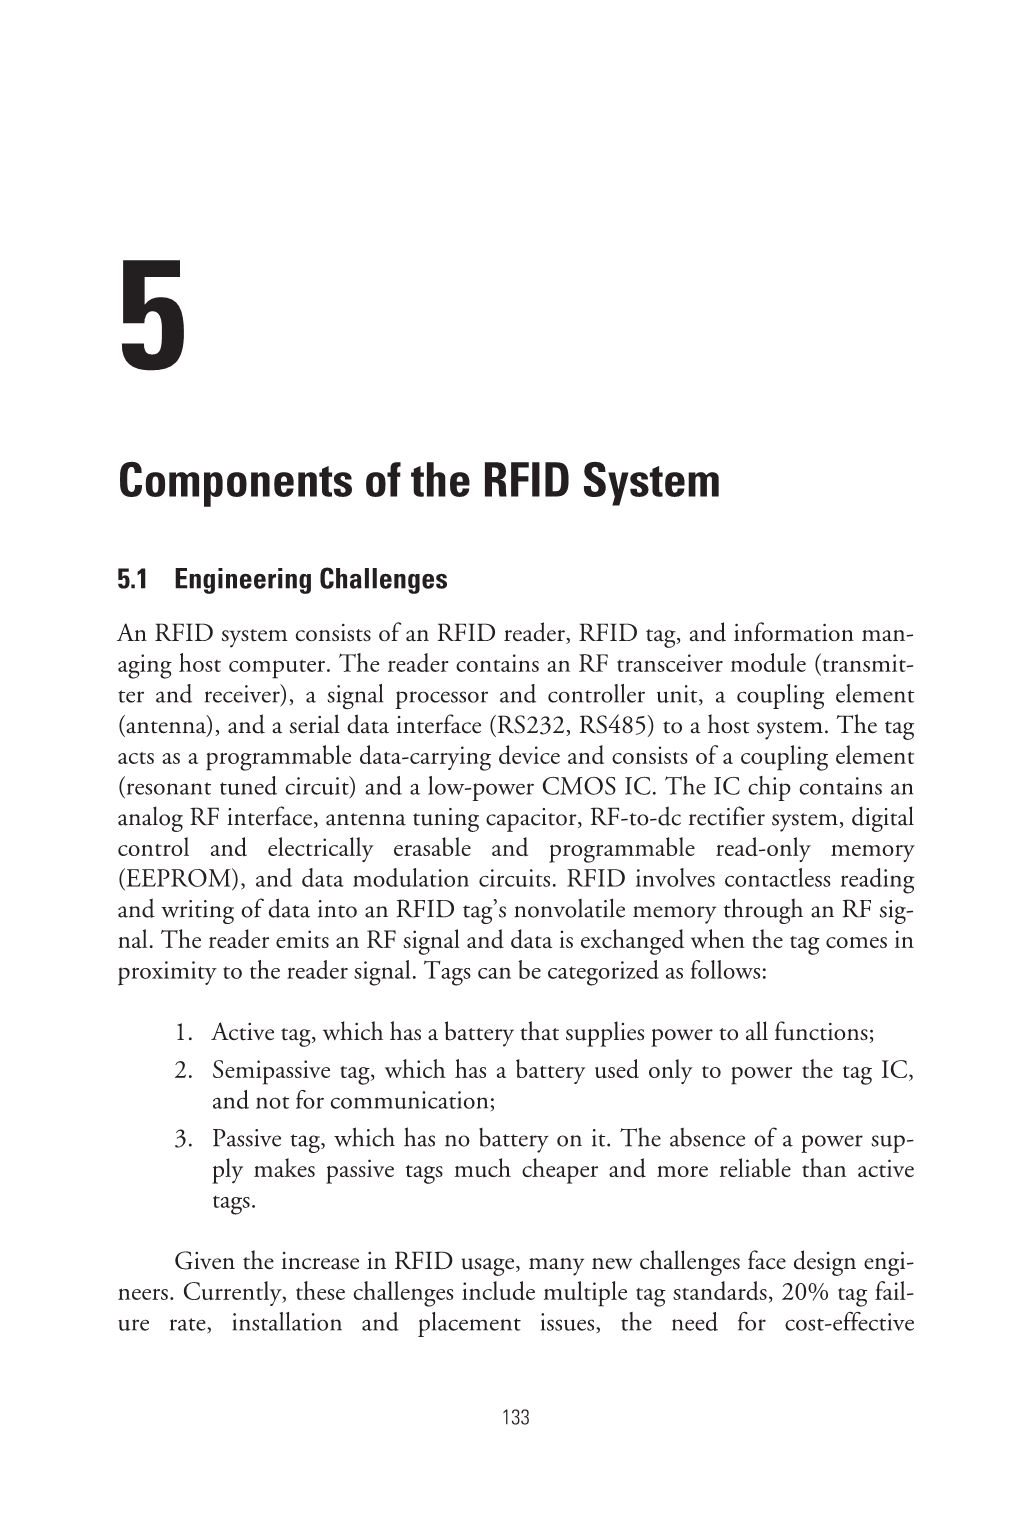 RFID Design Principles